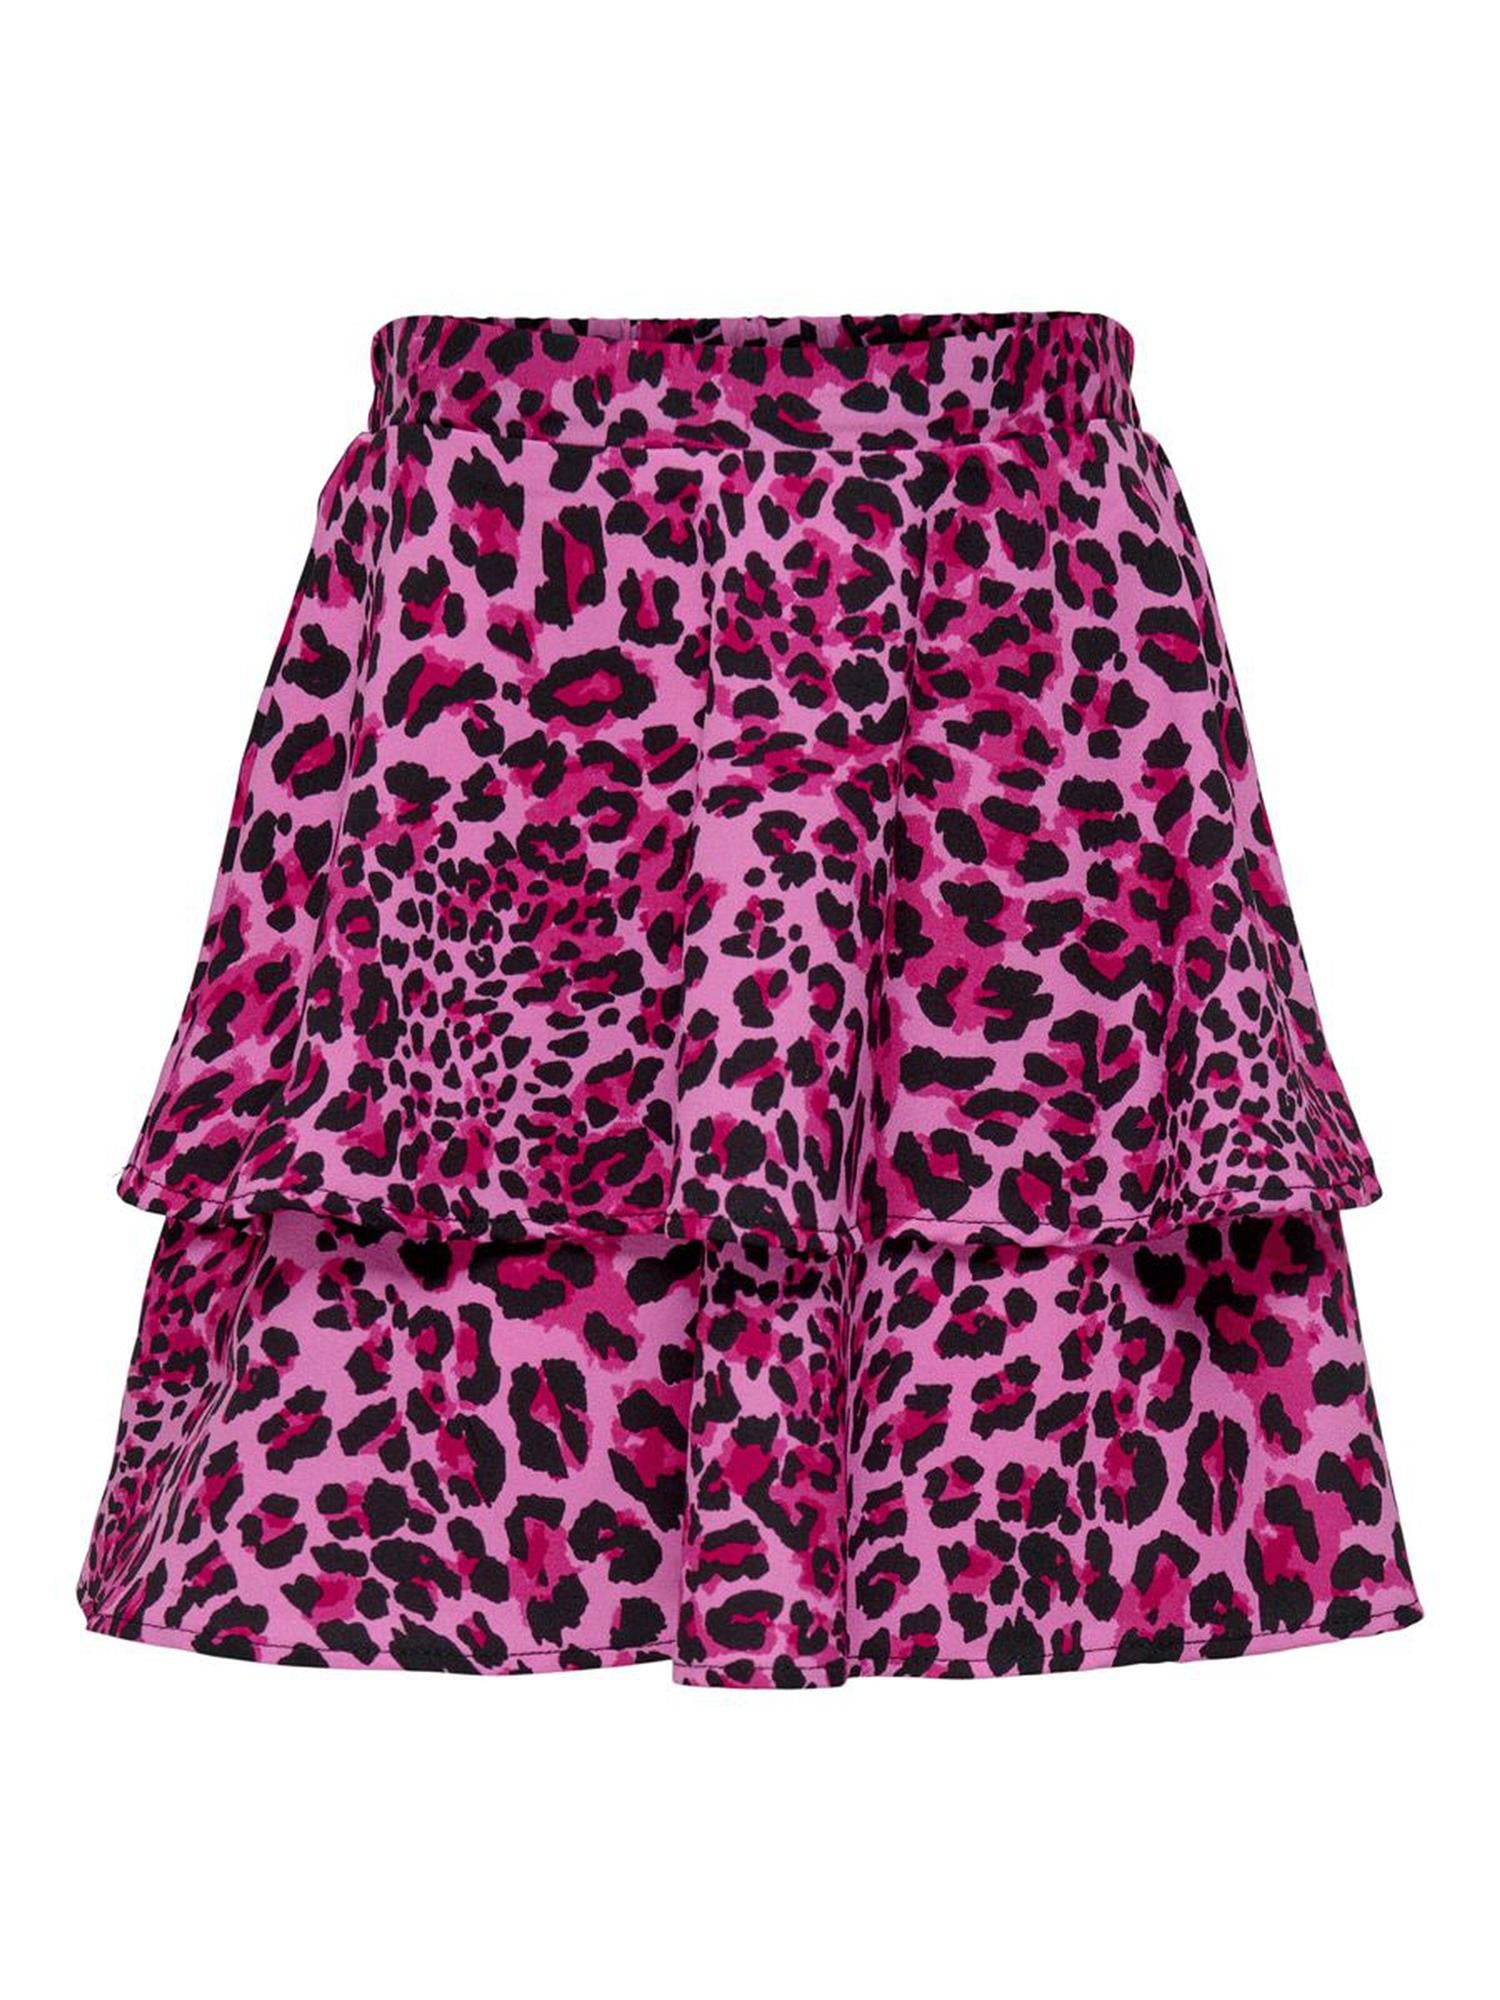 Kogtine Layered Skirt Leopard Pink